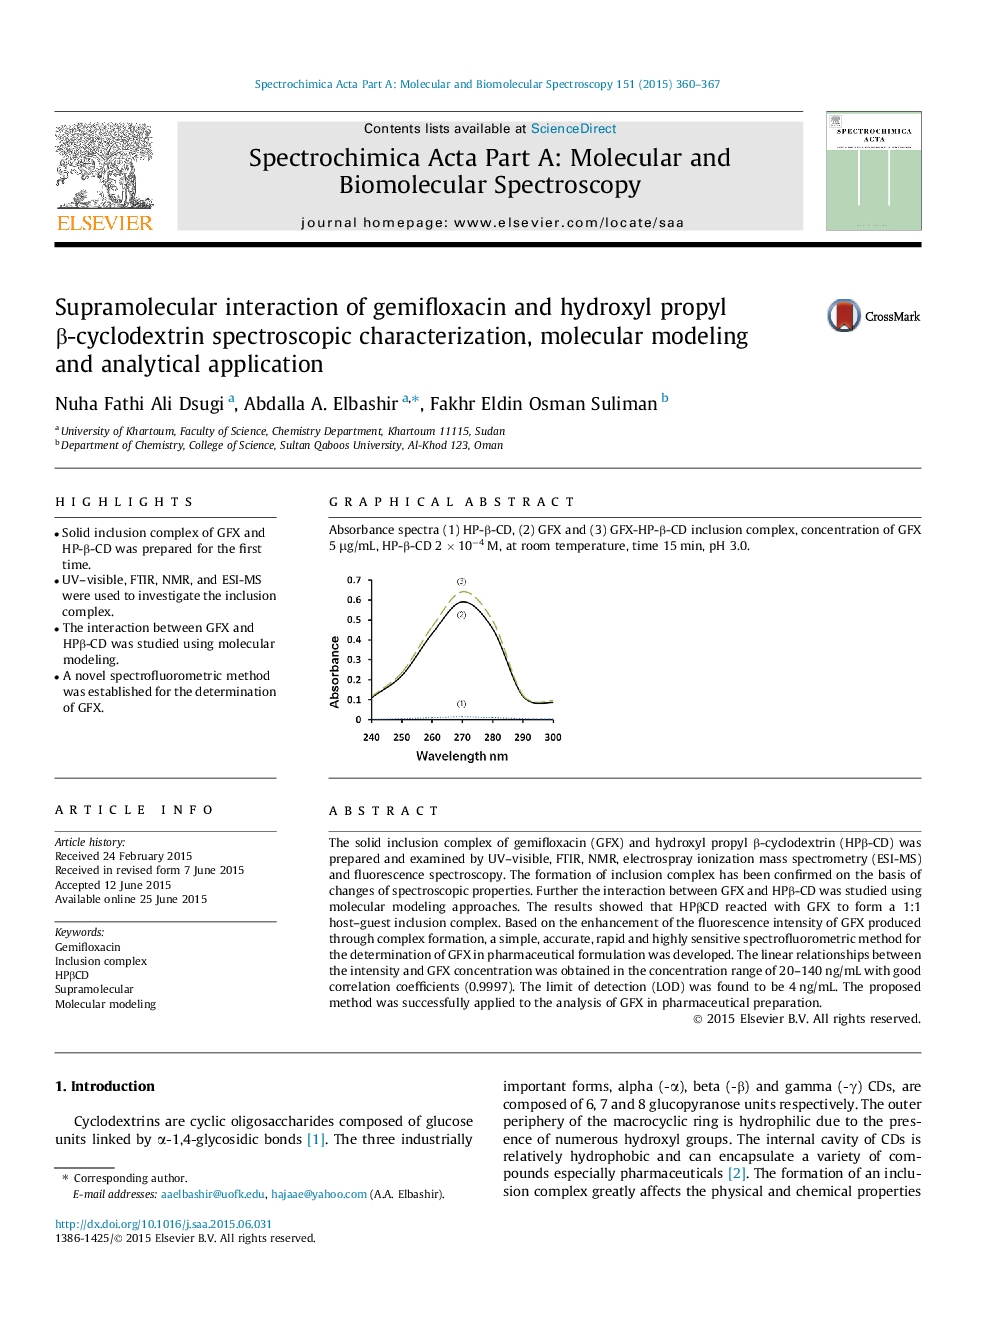 Supramolecular interaction of gemifloxacin and hydroxyl propyl β-cyclodextrin spectroscopic characterization, molecular modeling and analytical application